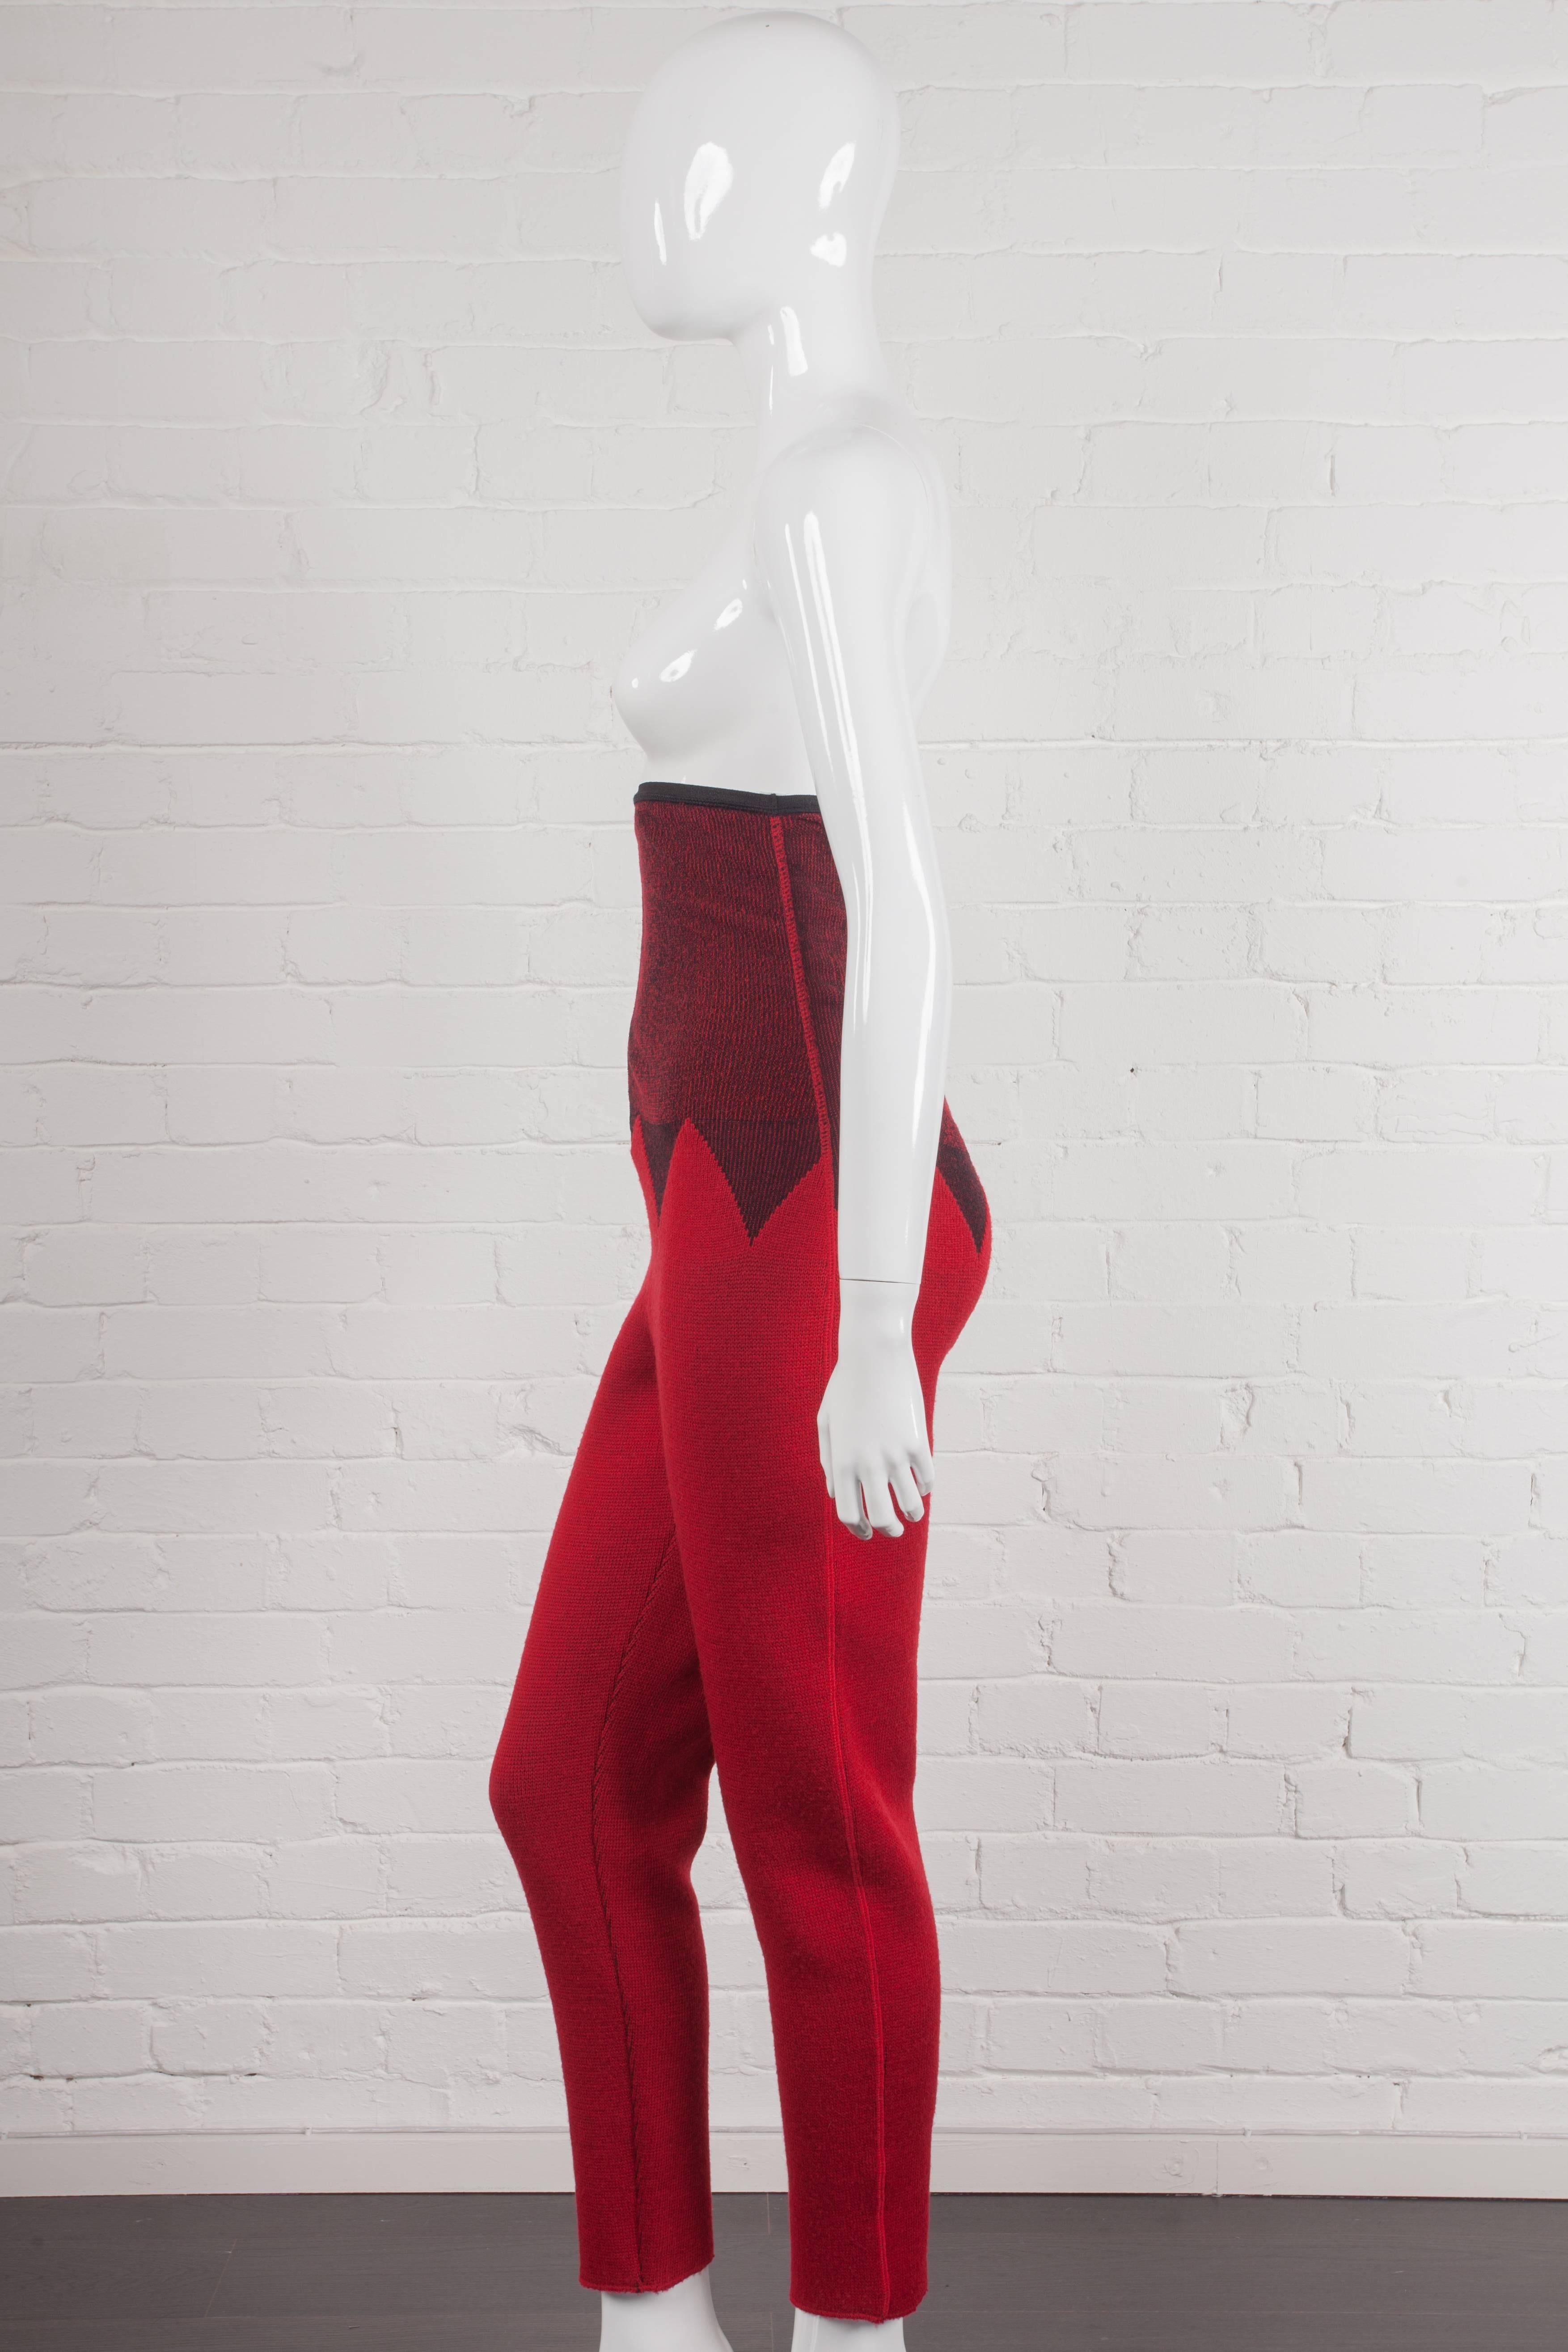 Jean Paul Gaultier 1987/88 “Forbidden Gaultier” high waisted trousers For Sale 1